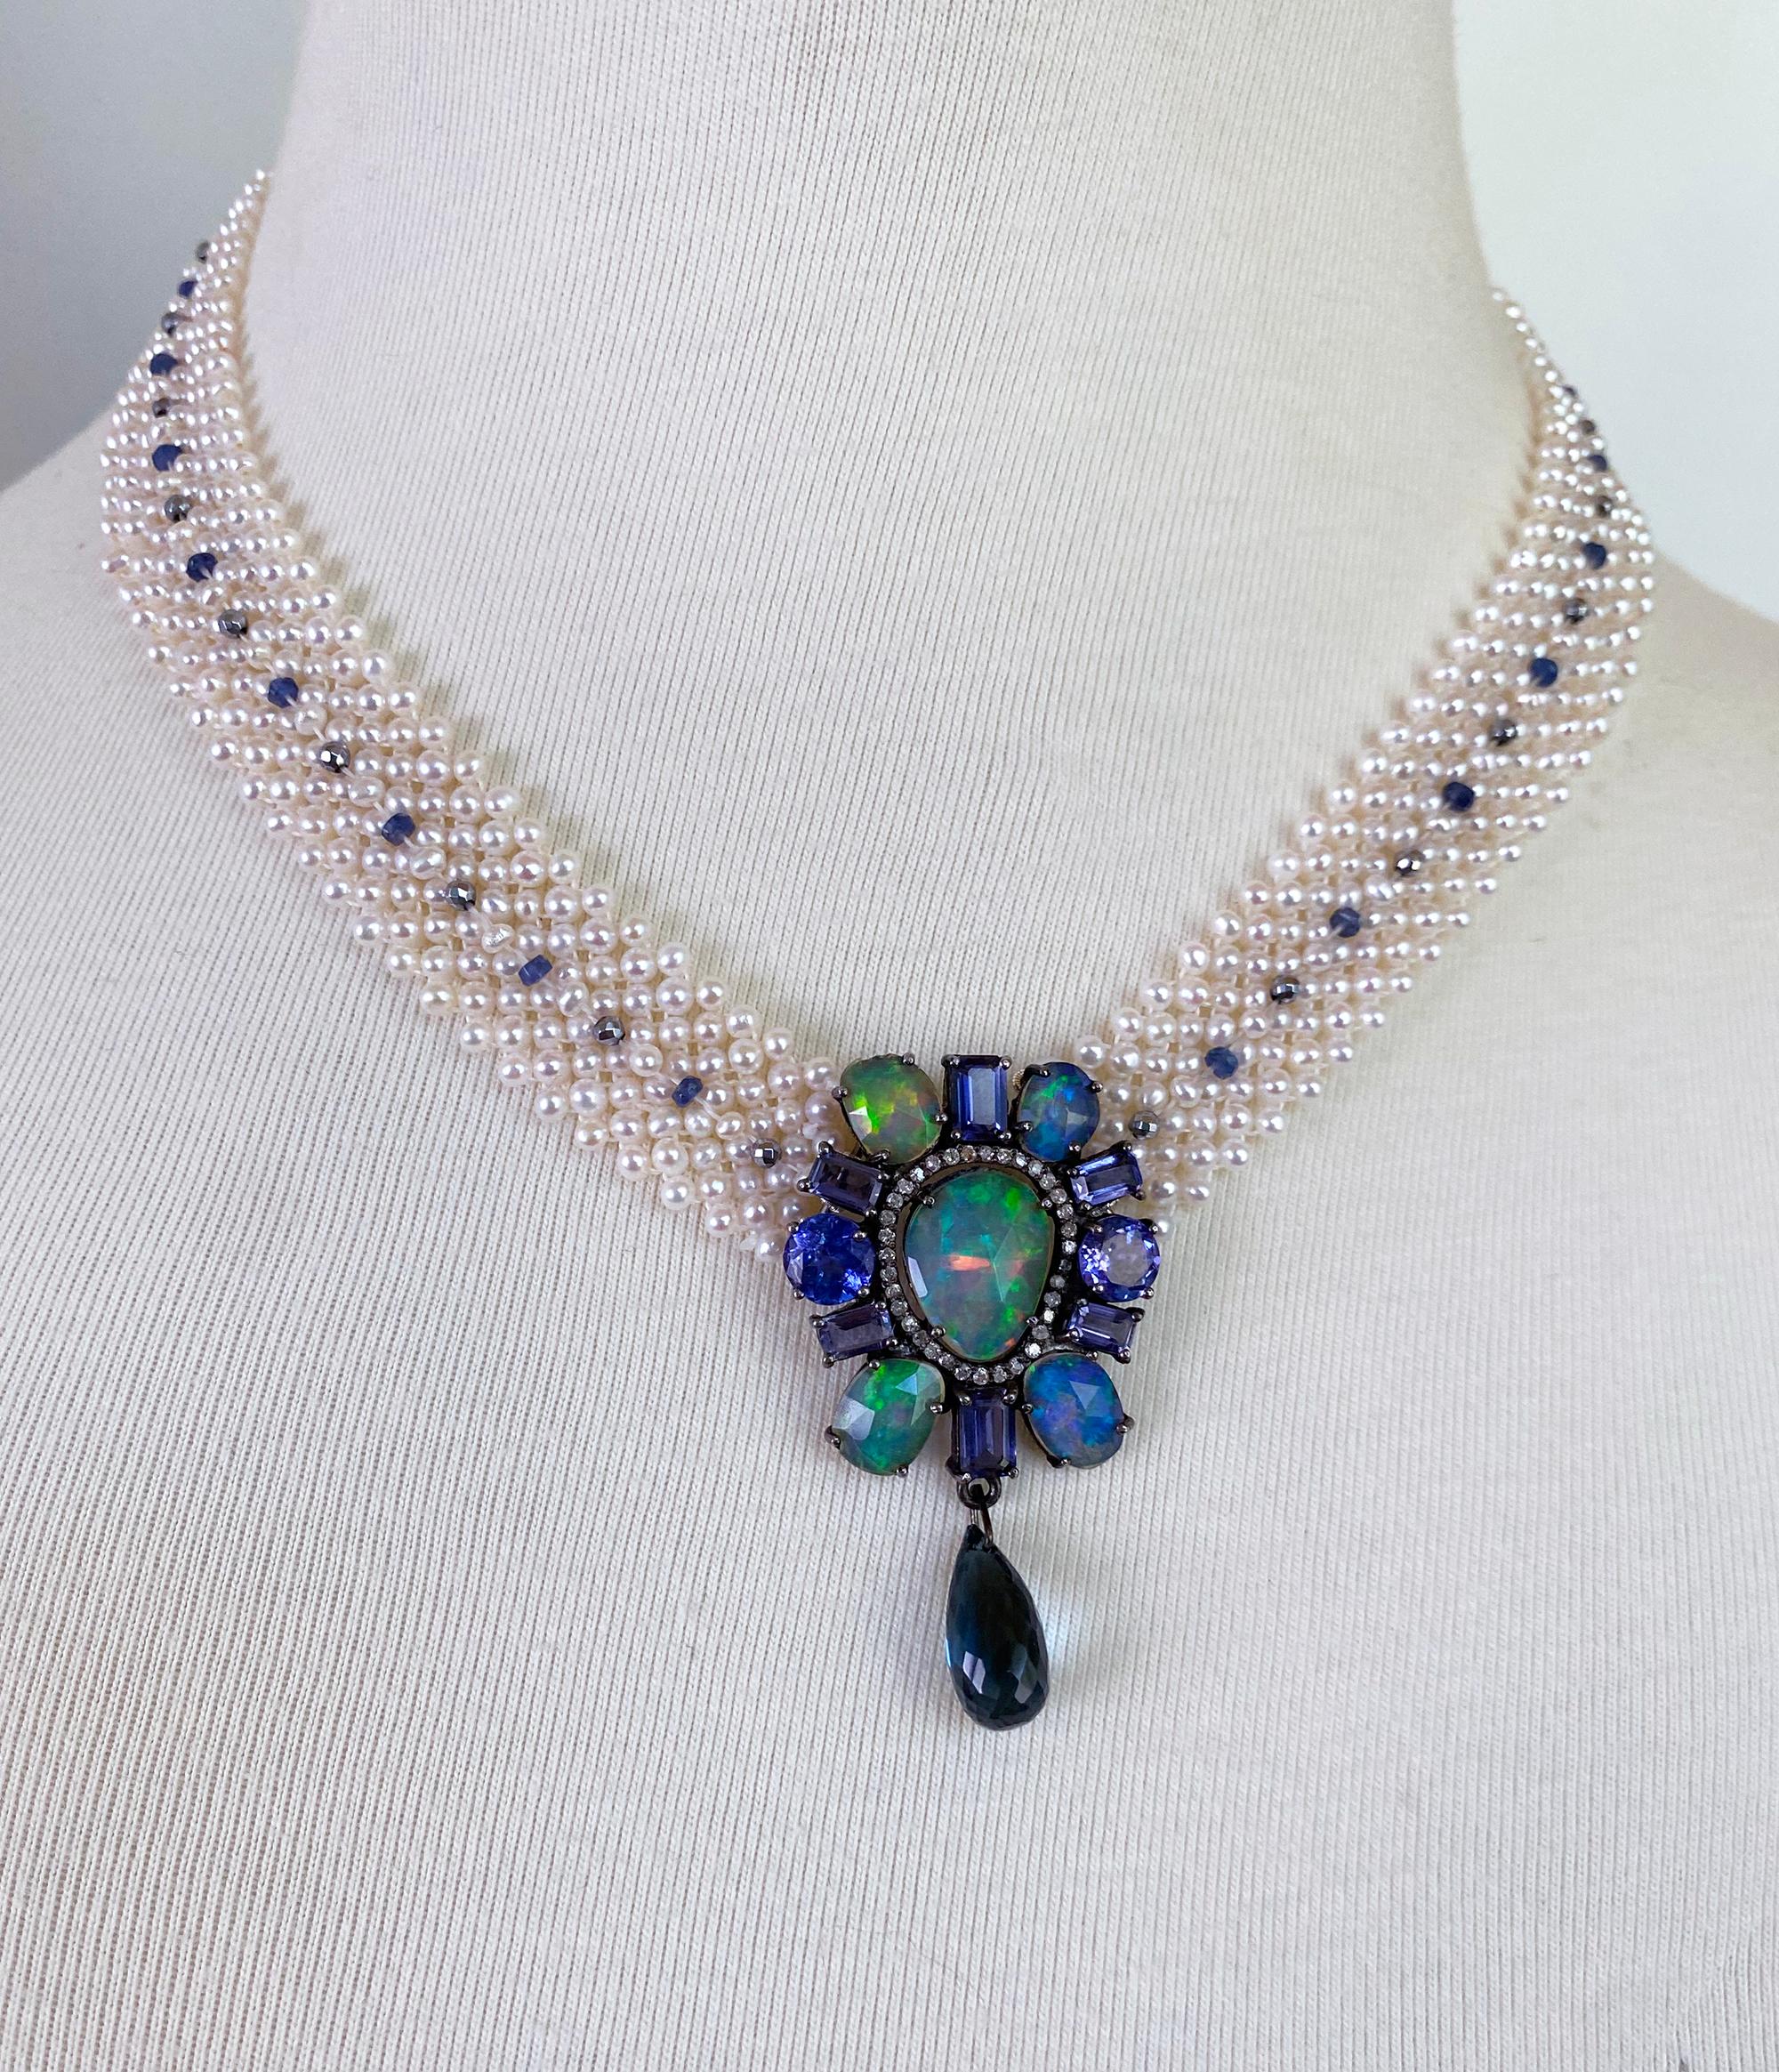 Cushion Cut Marina J. Pearl Lace Necklace with Fire Opal, Tanzanite & Diamond Centerpiece